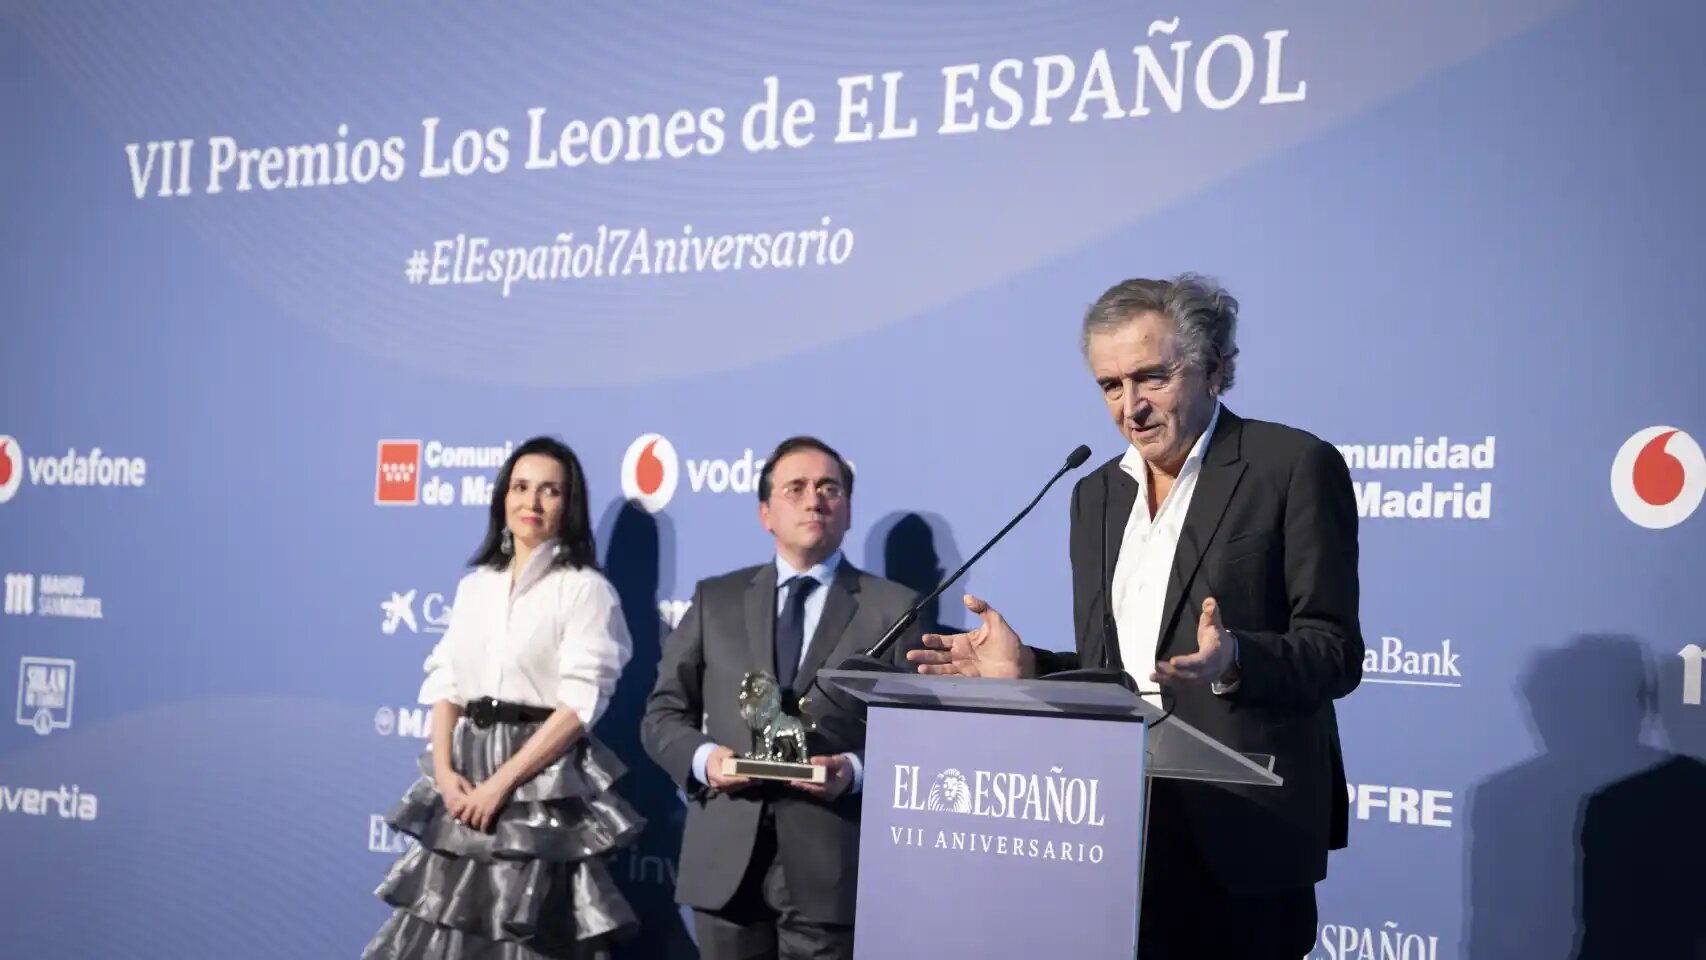 Cruz Sánchez de Lara, Vice President of "El Español"; José Manuel Albares, Minister of Foreign Affairs; and Bernard-Henri Lévy, writer and philosopher, director of the film "Why Ukraine".